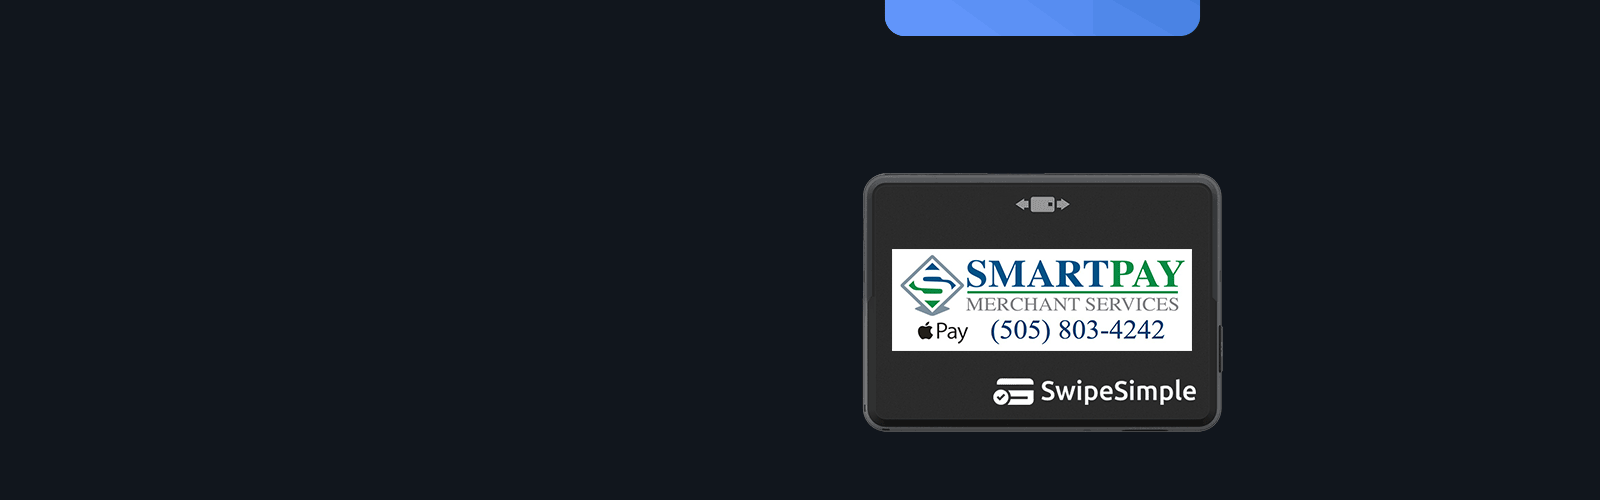 SmartPay – Merchant Services